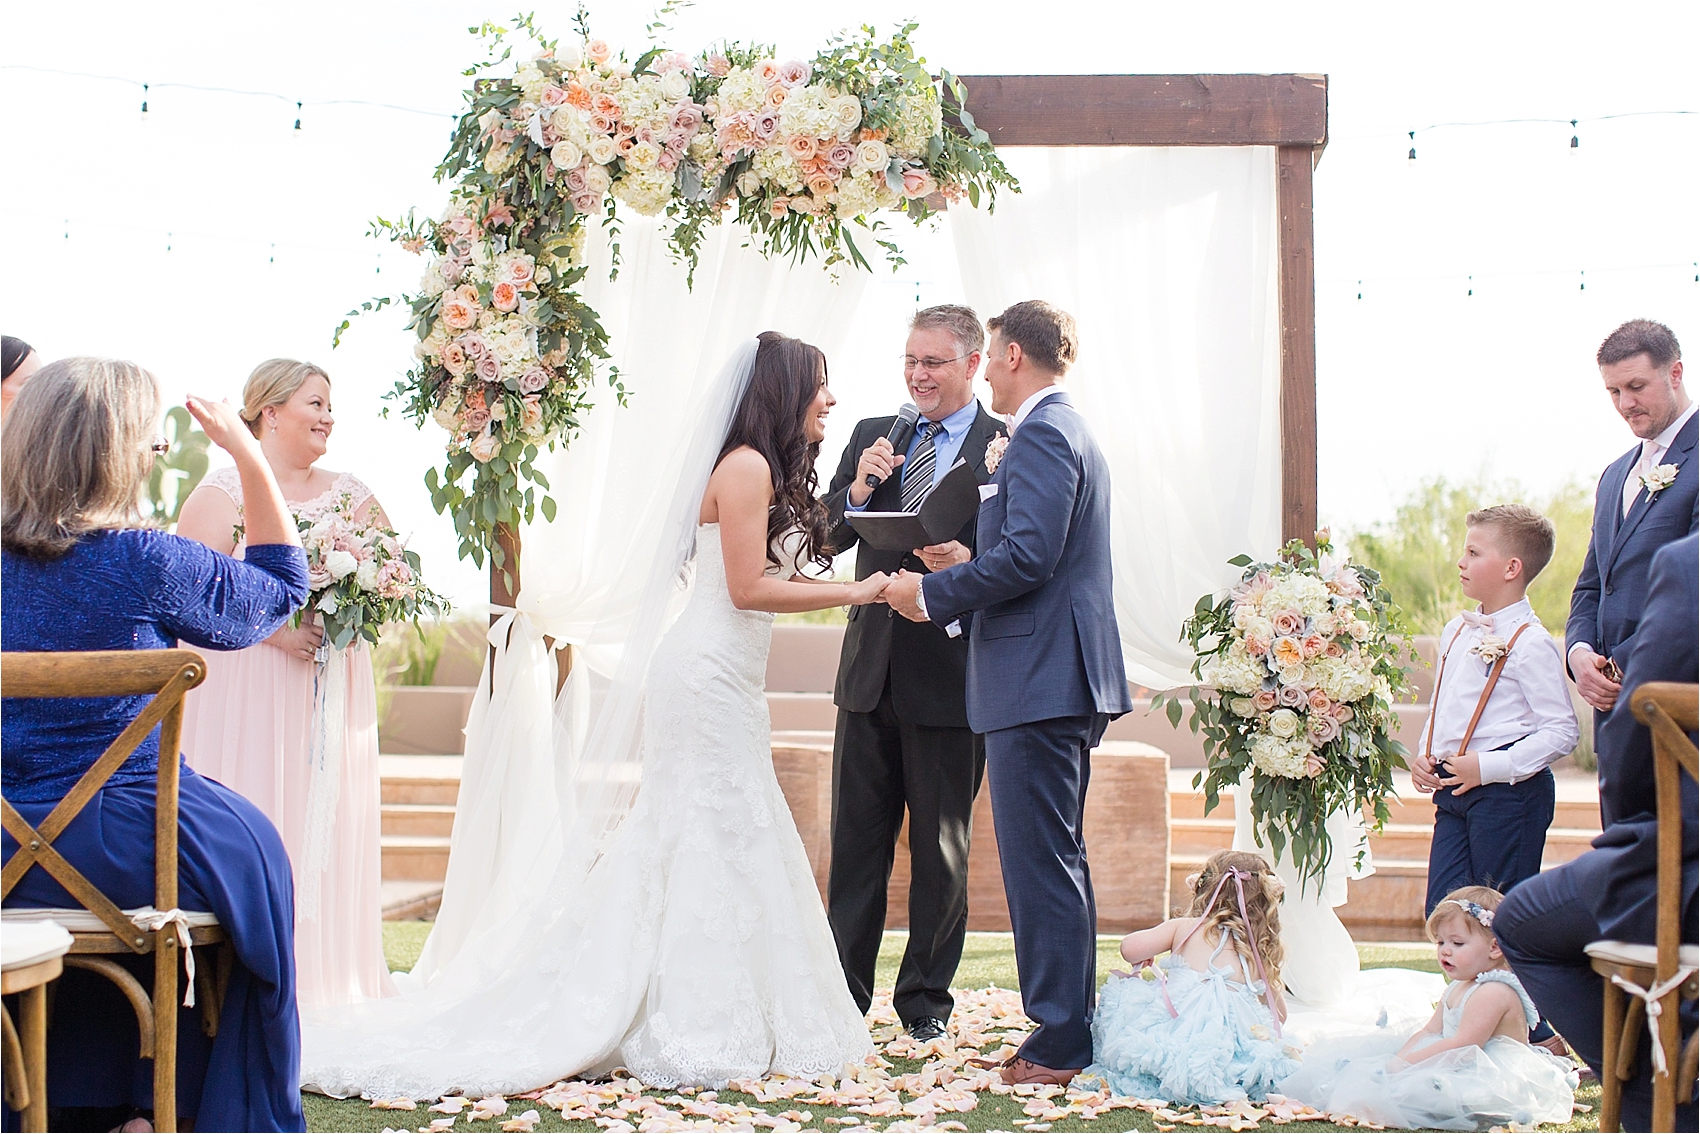 Four Seasons Scottsdale Wedding Ceremony in Arizona